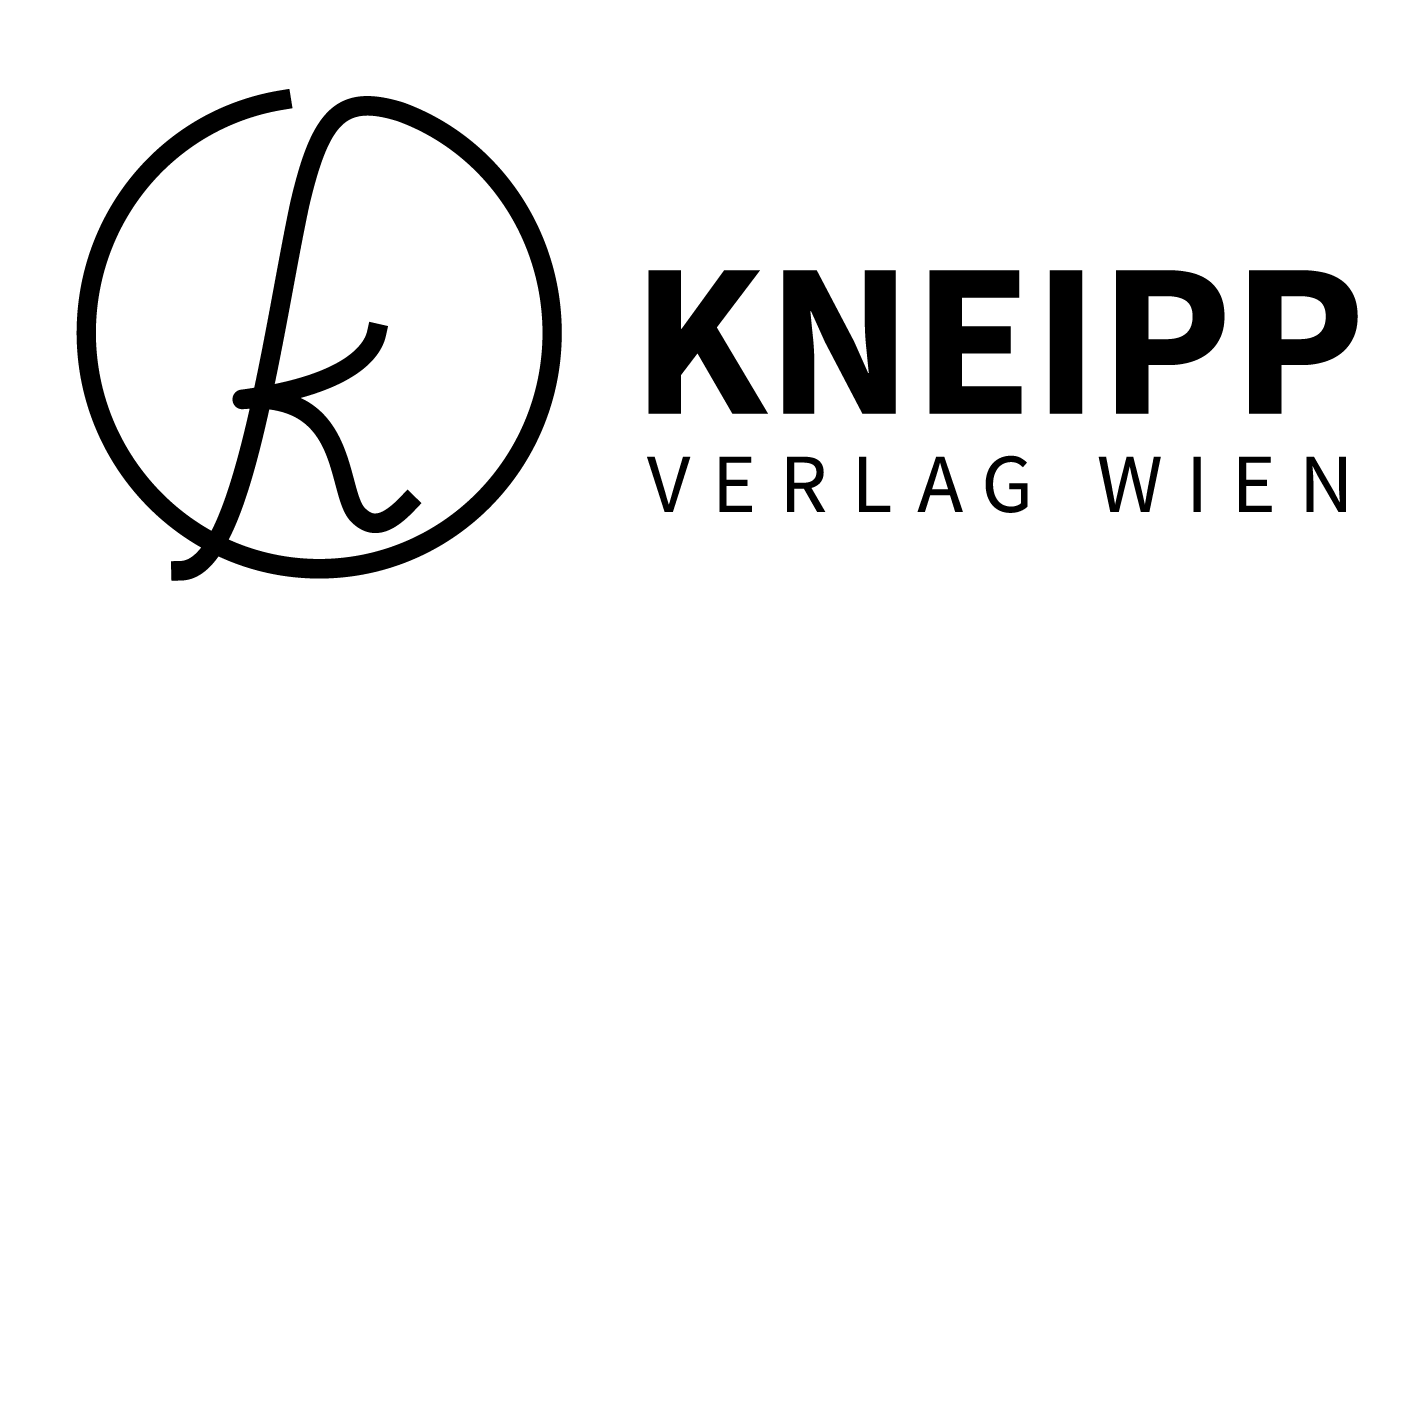 Kneipp Verlag Wien